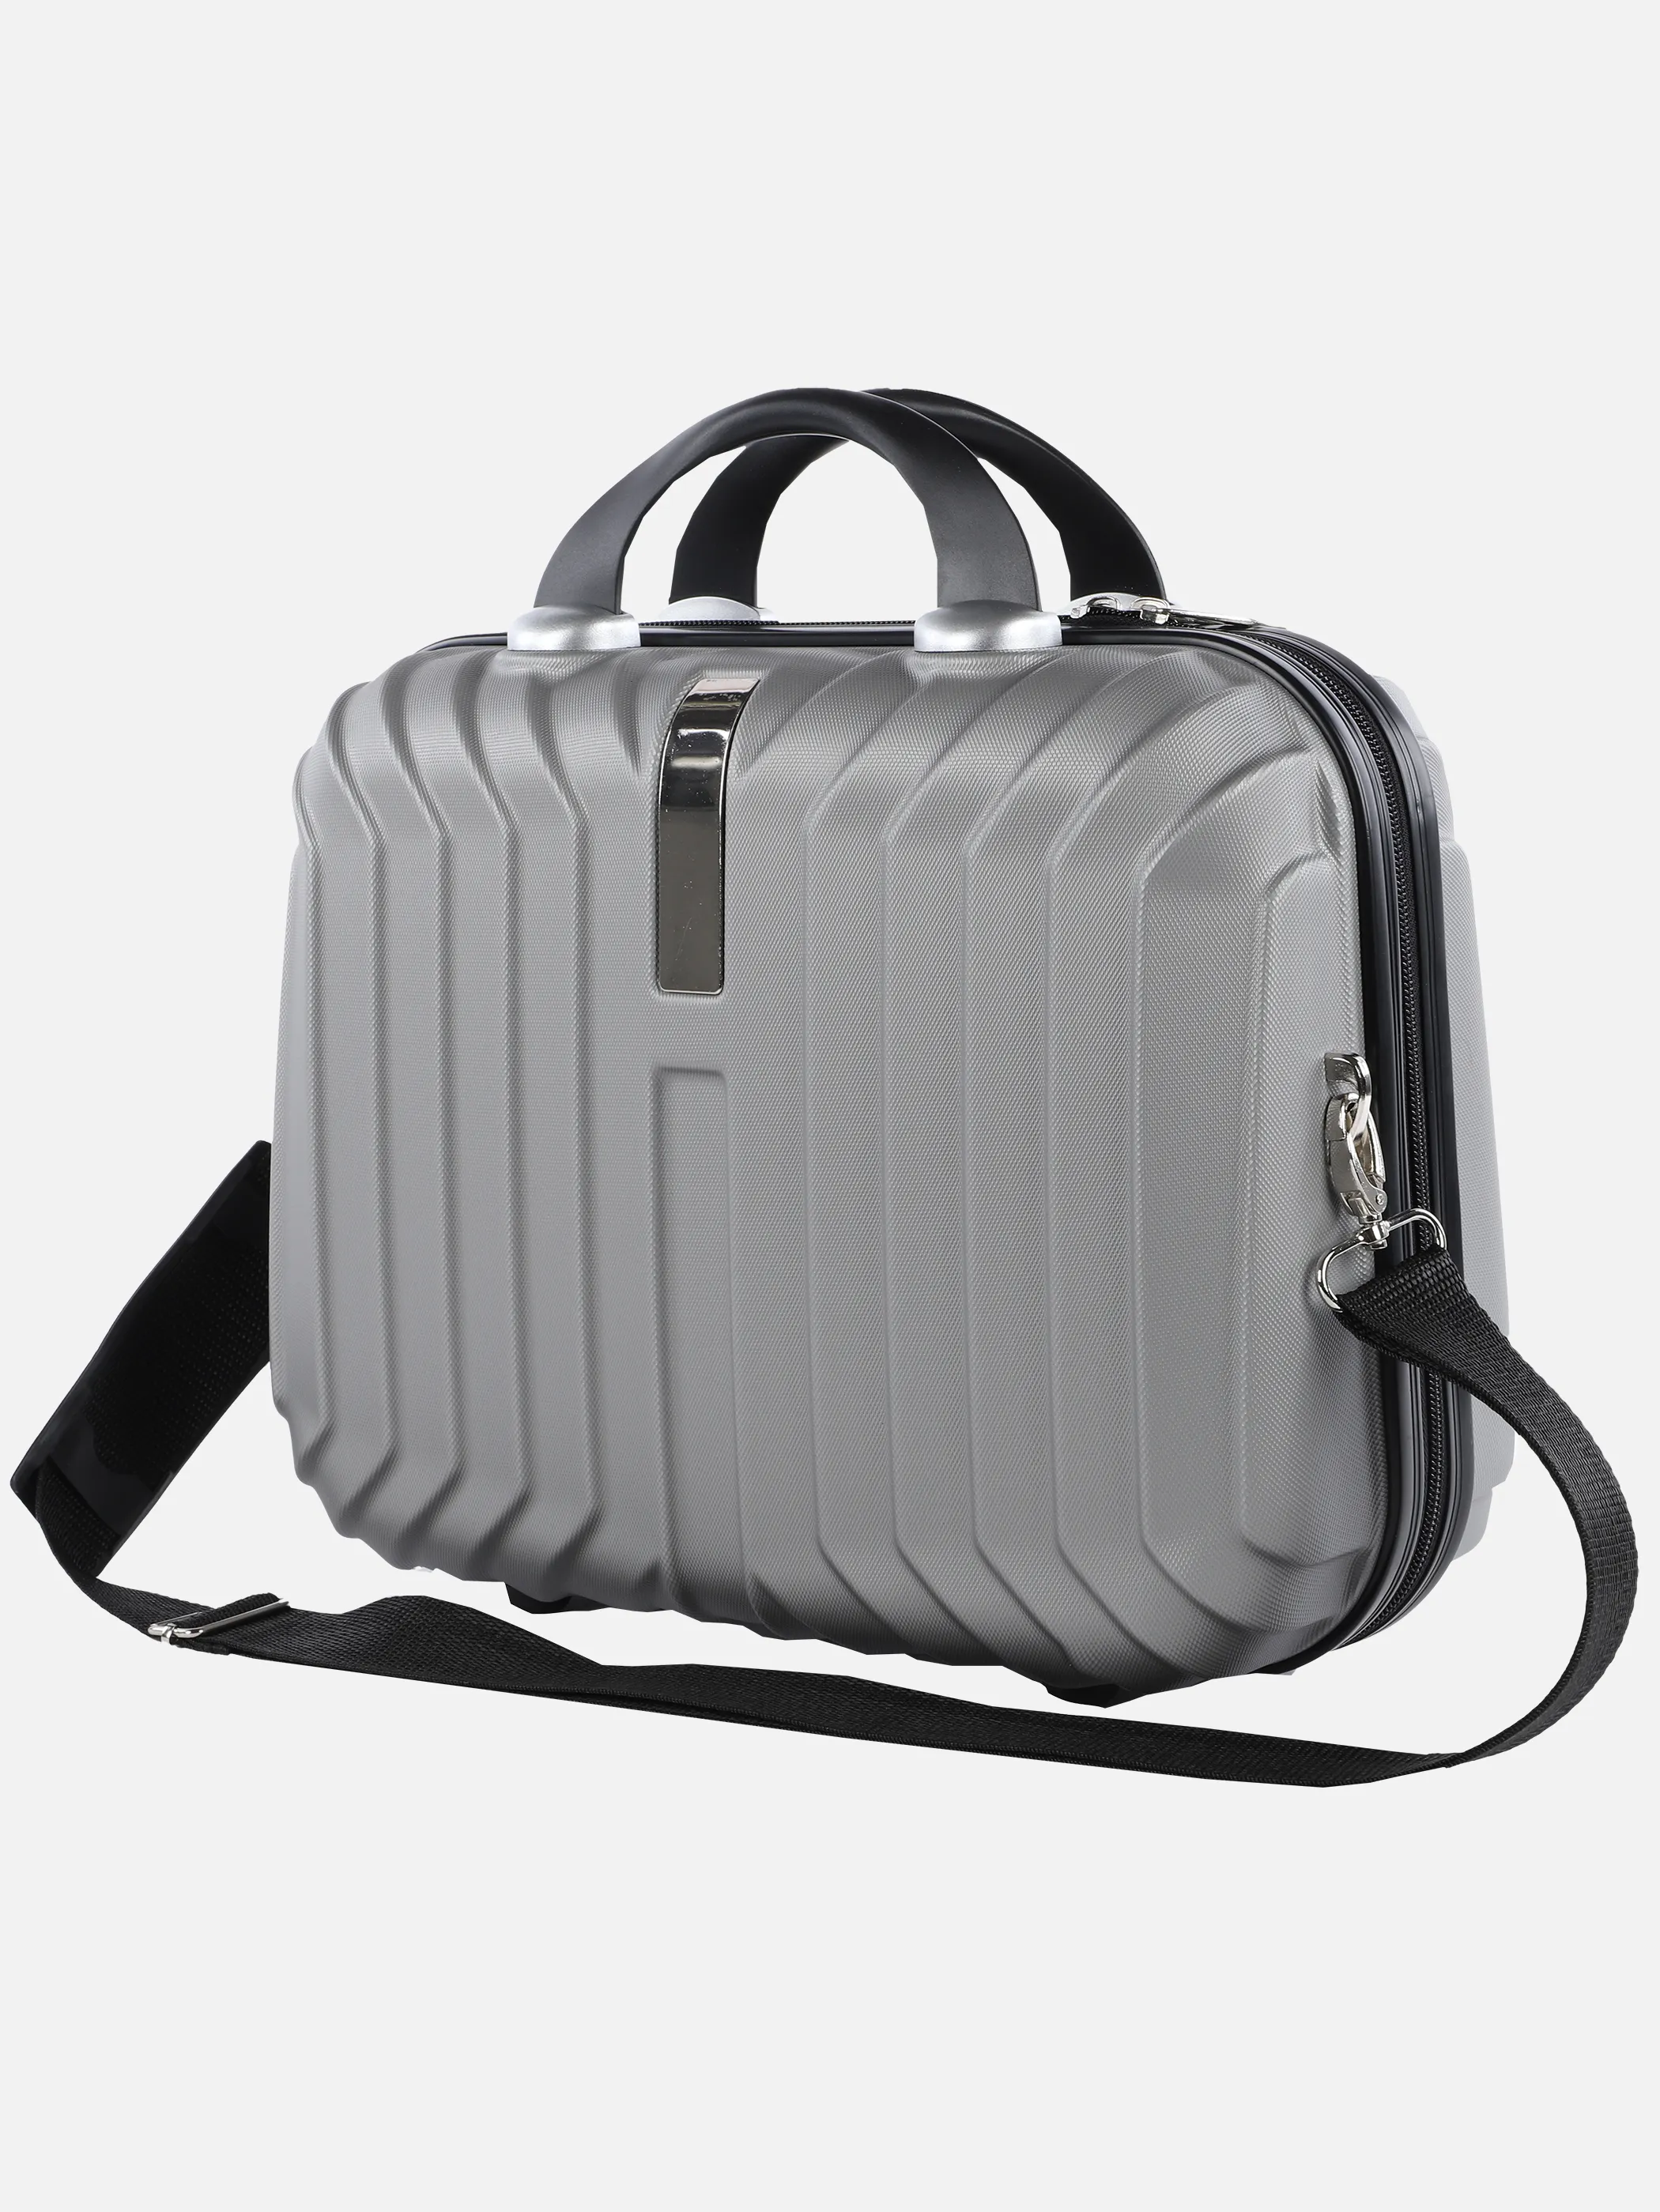 Koffer/Taschen Beautycase Palma Grau 894668 SILBER 1